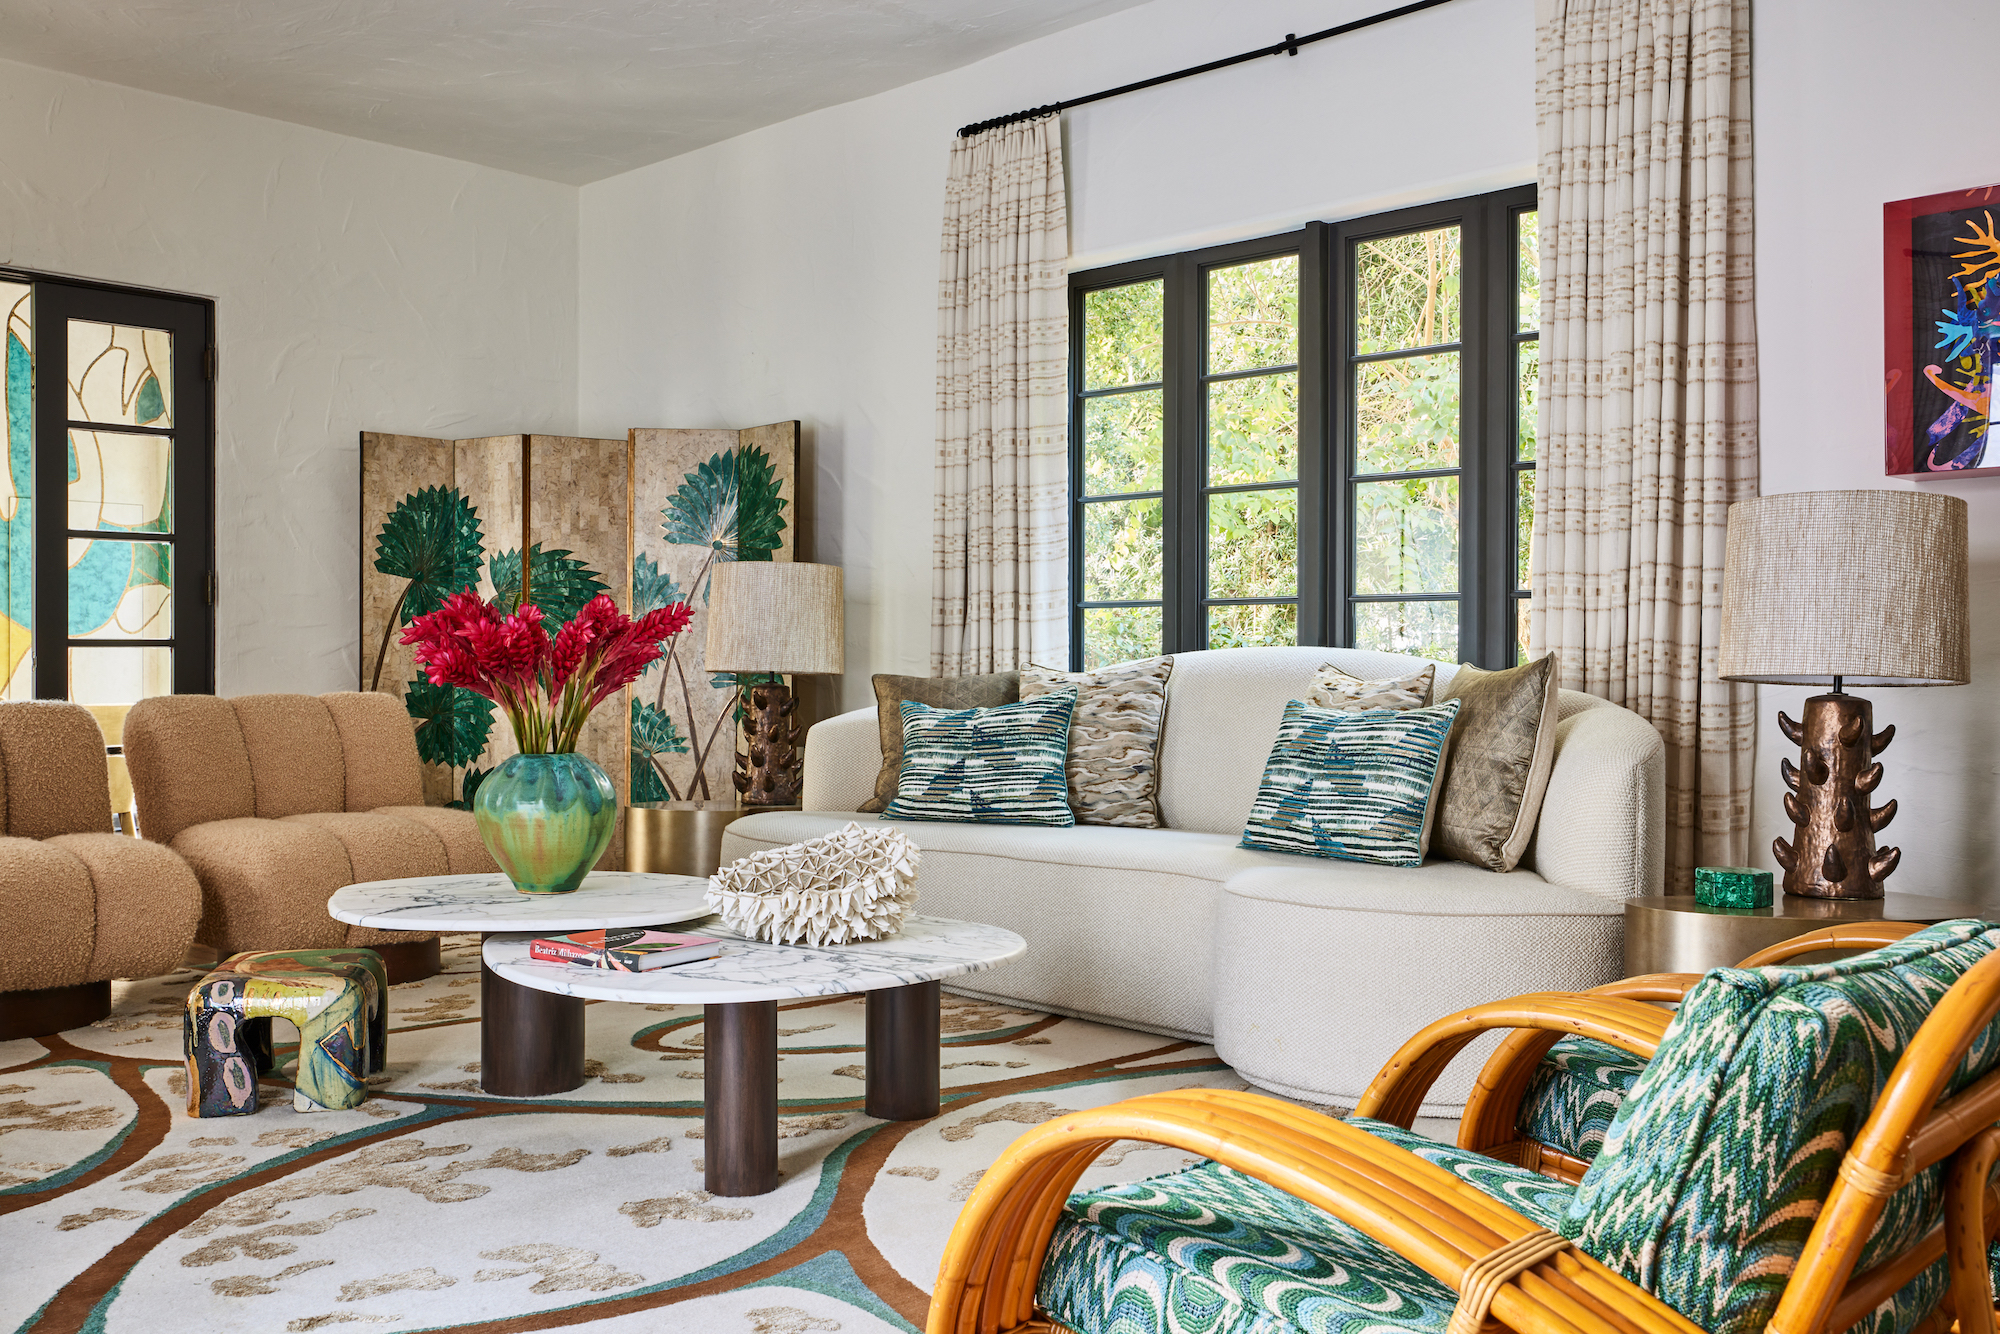 The living room at Palmarito – Natalia Miyar's own Miami home in Effect Magazine